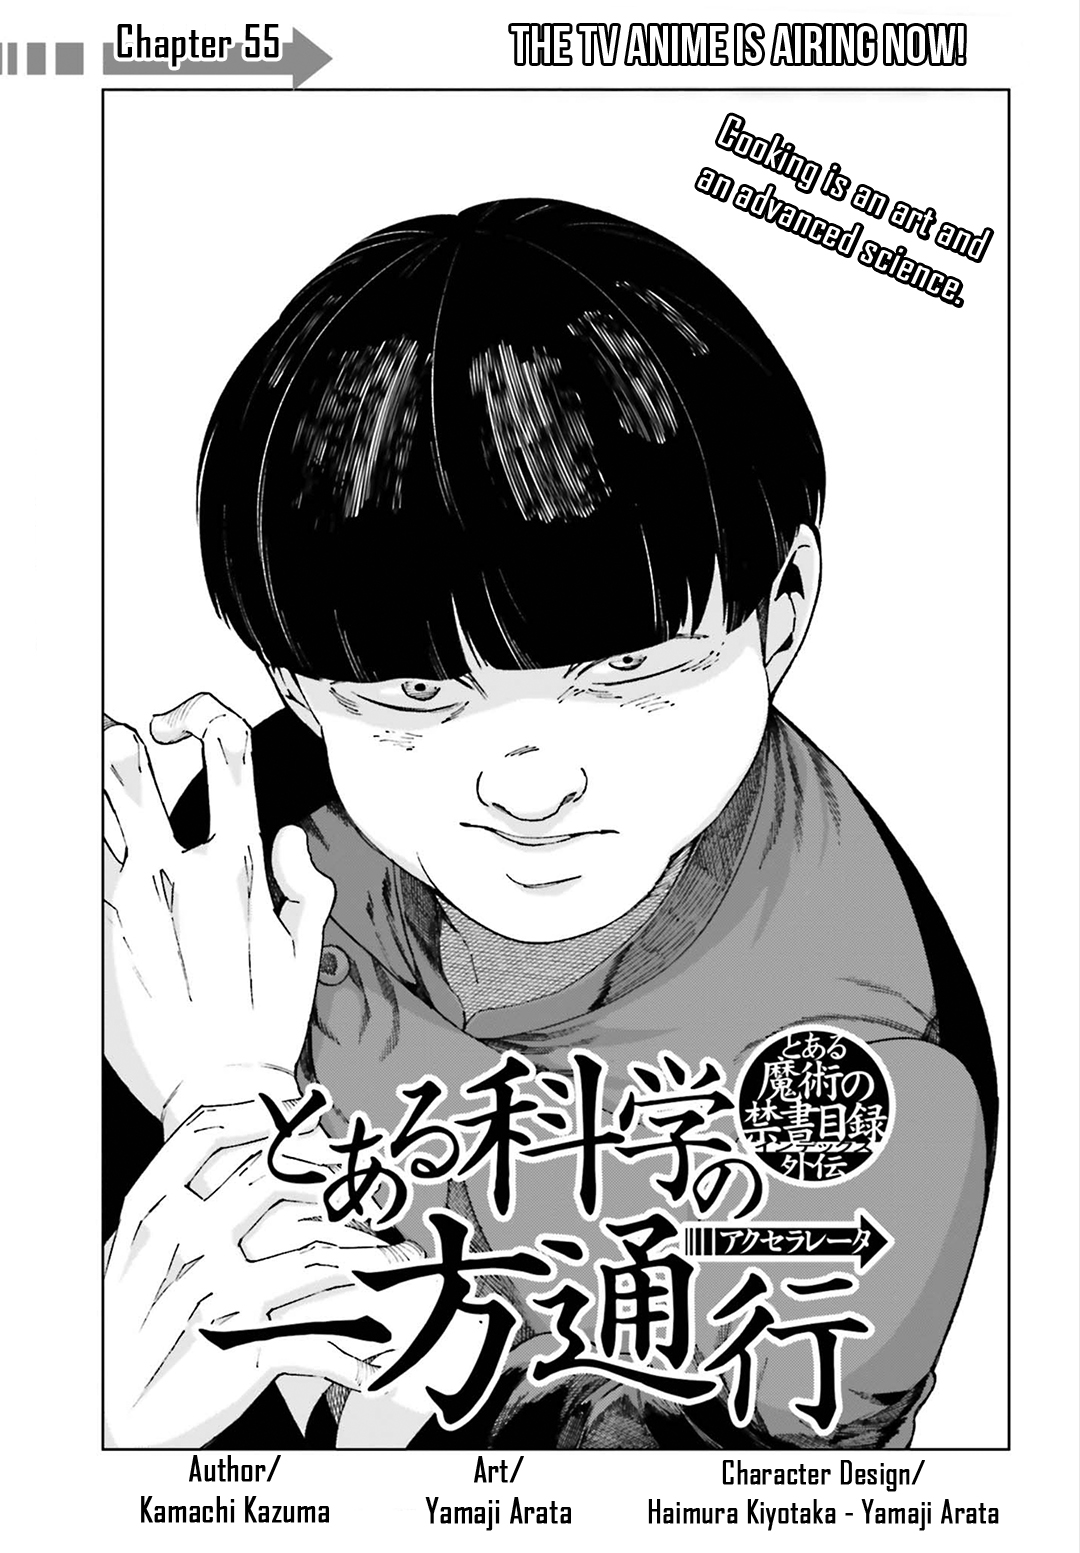 Toaru Kagaku no Accelerator Vol. 11 Ch. 55